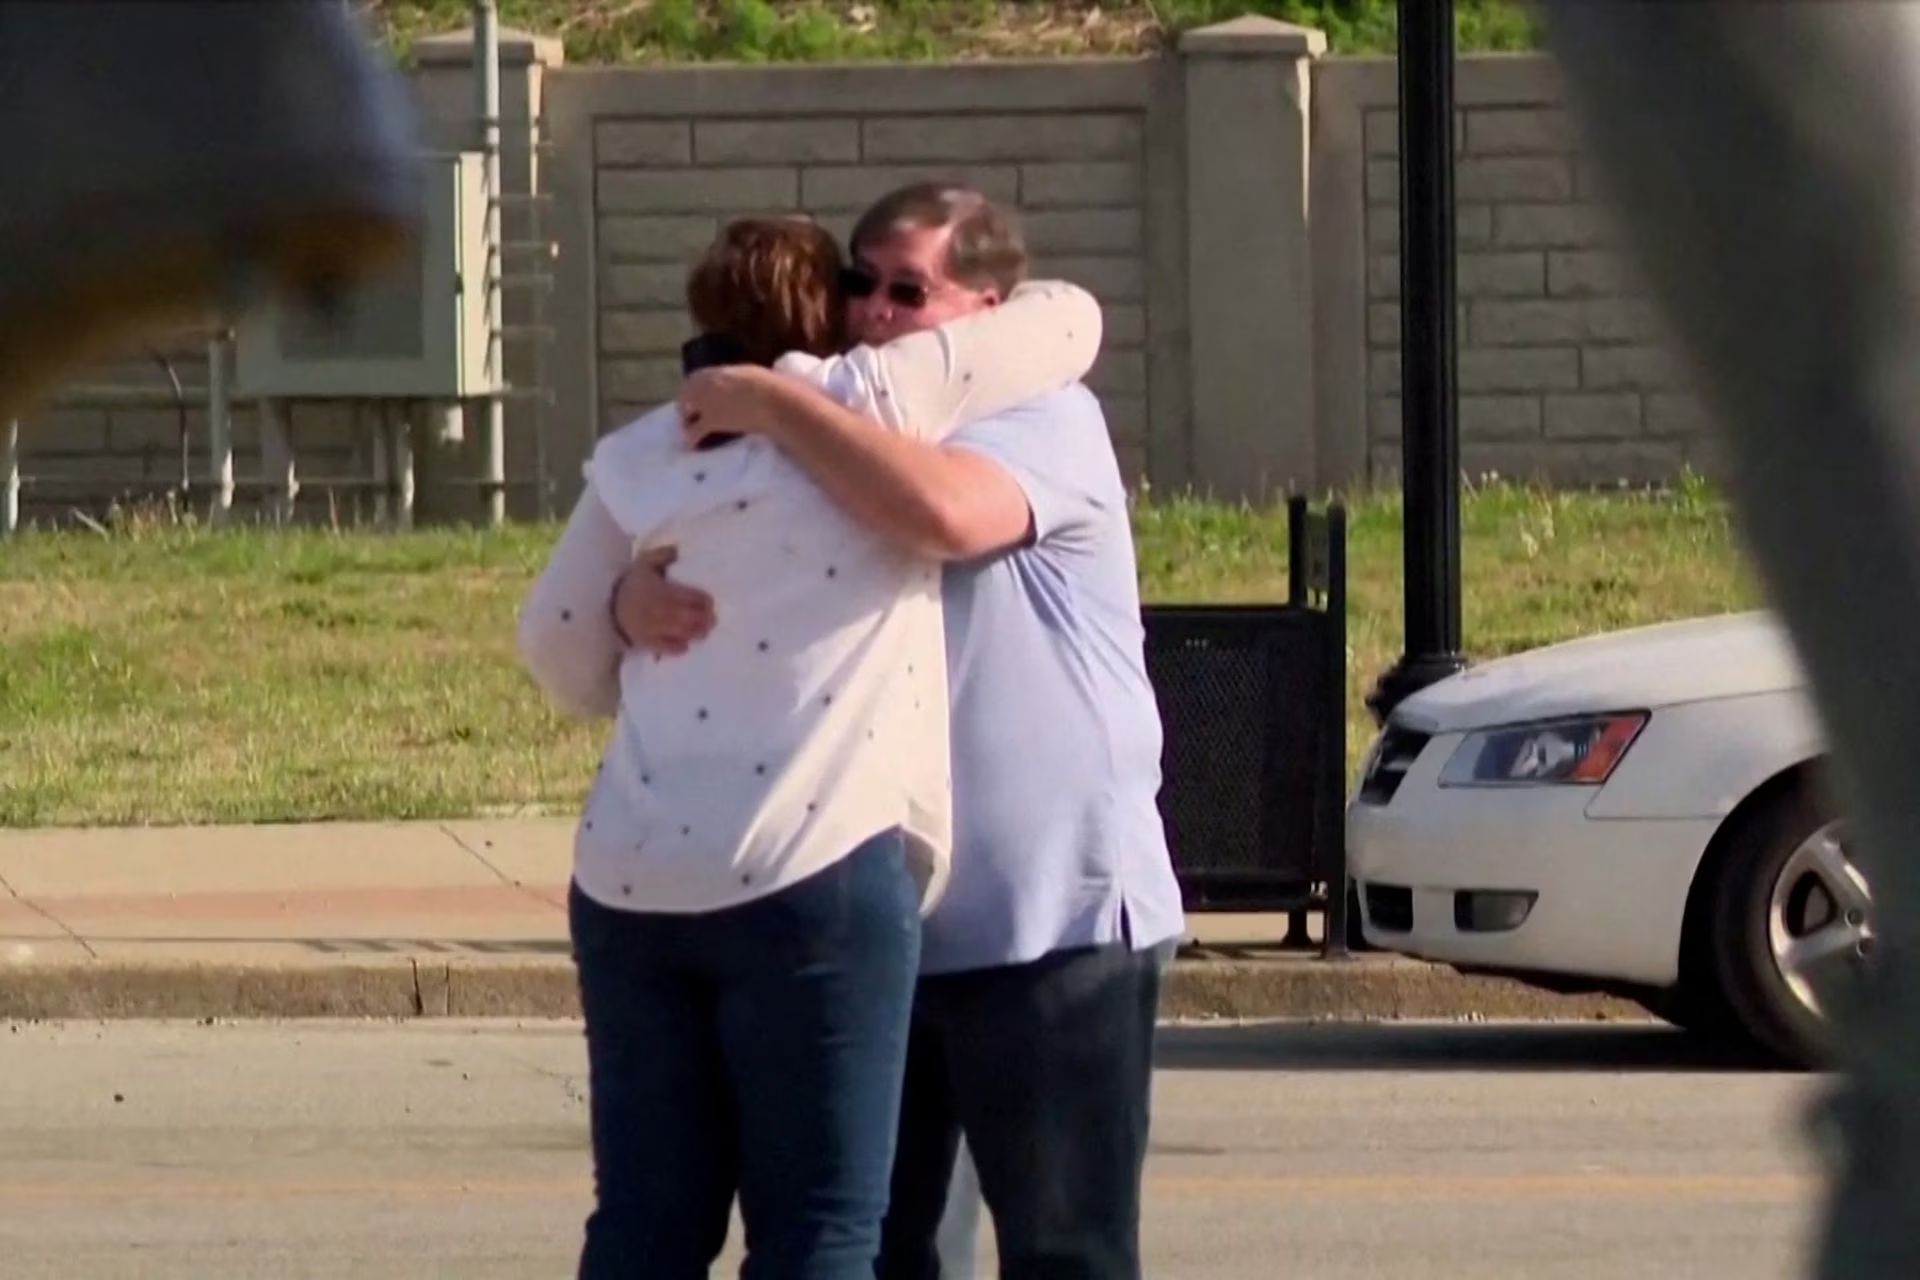 Bank worker kills five co-workers in Louisville, Kentucky shooting